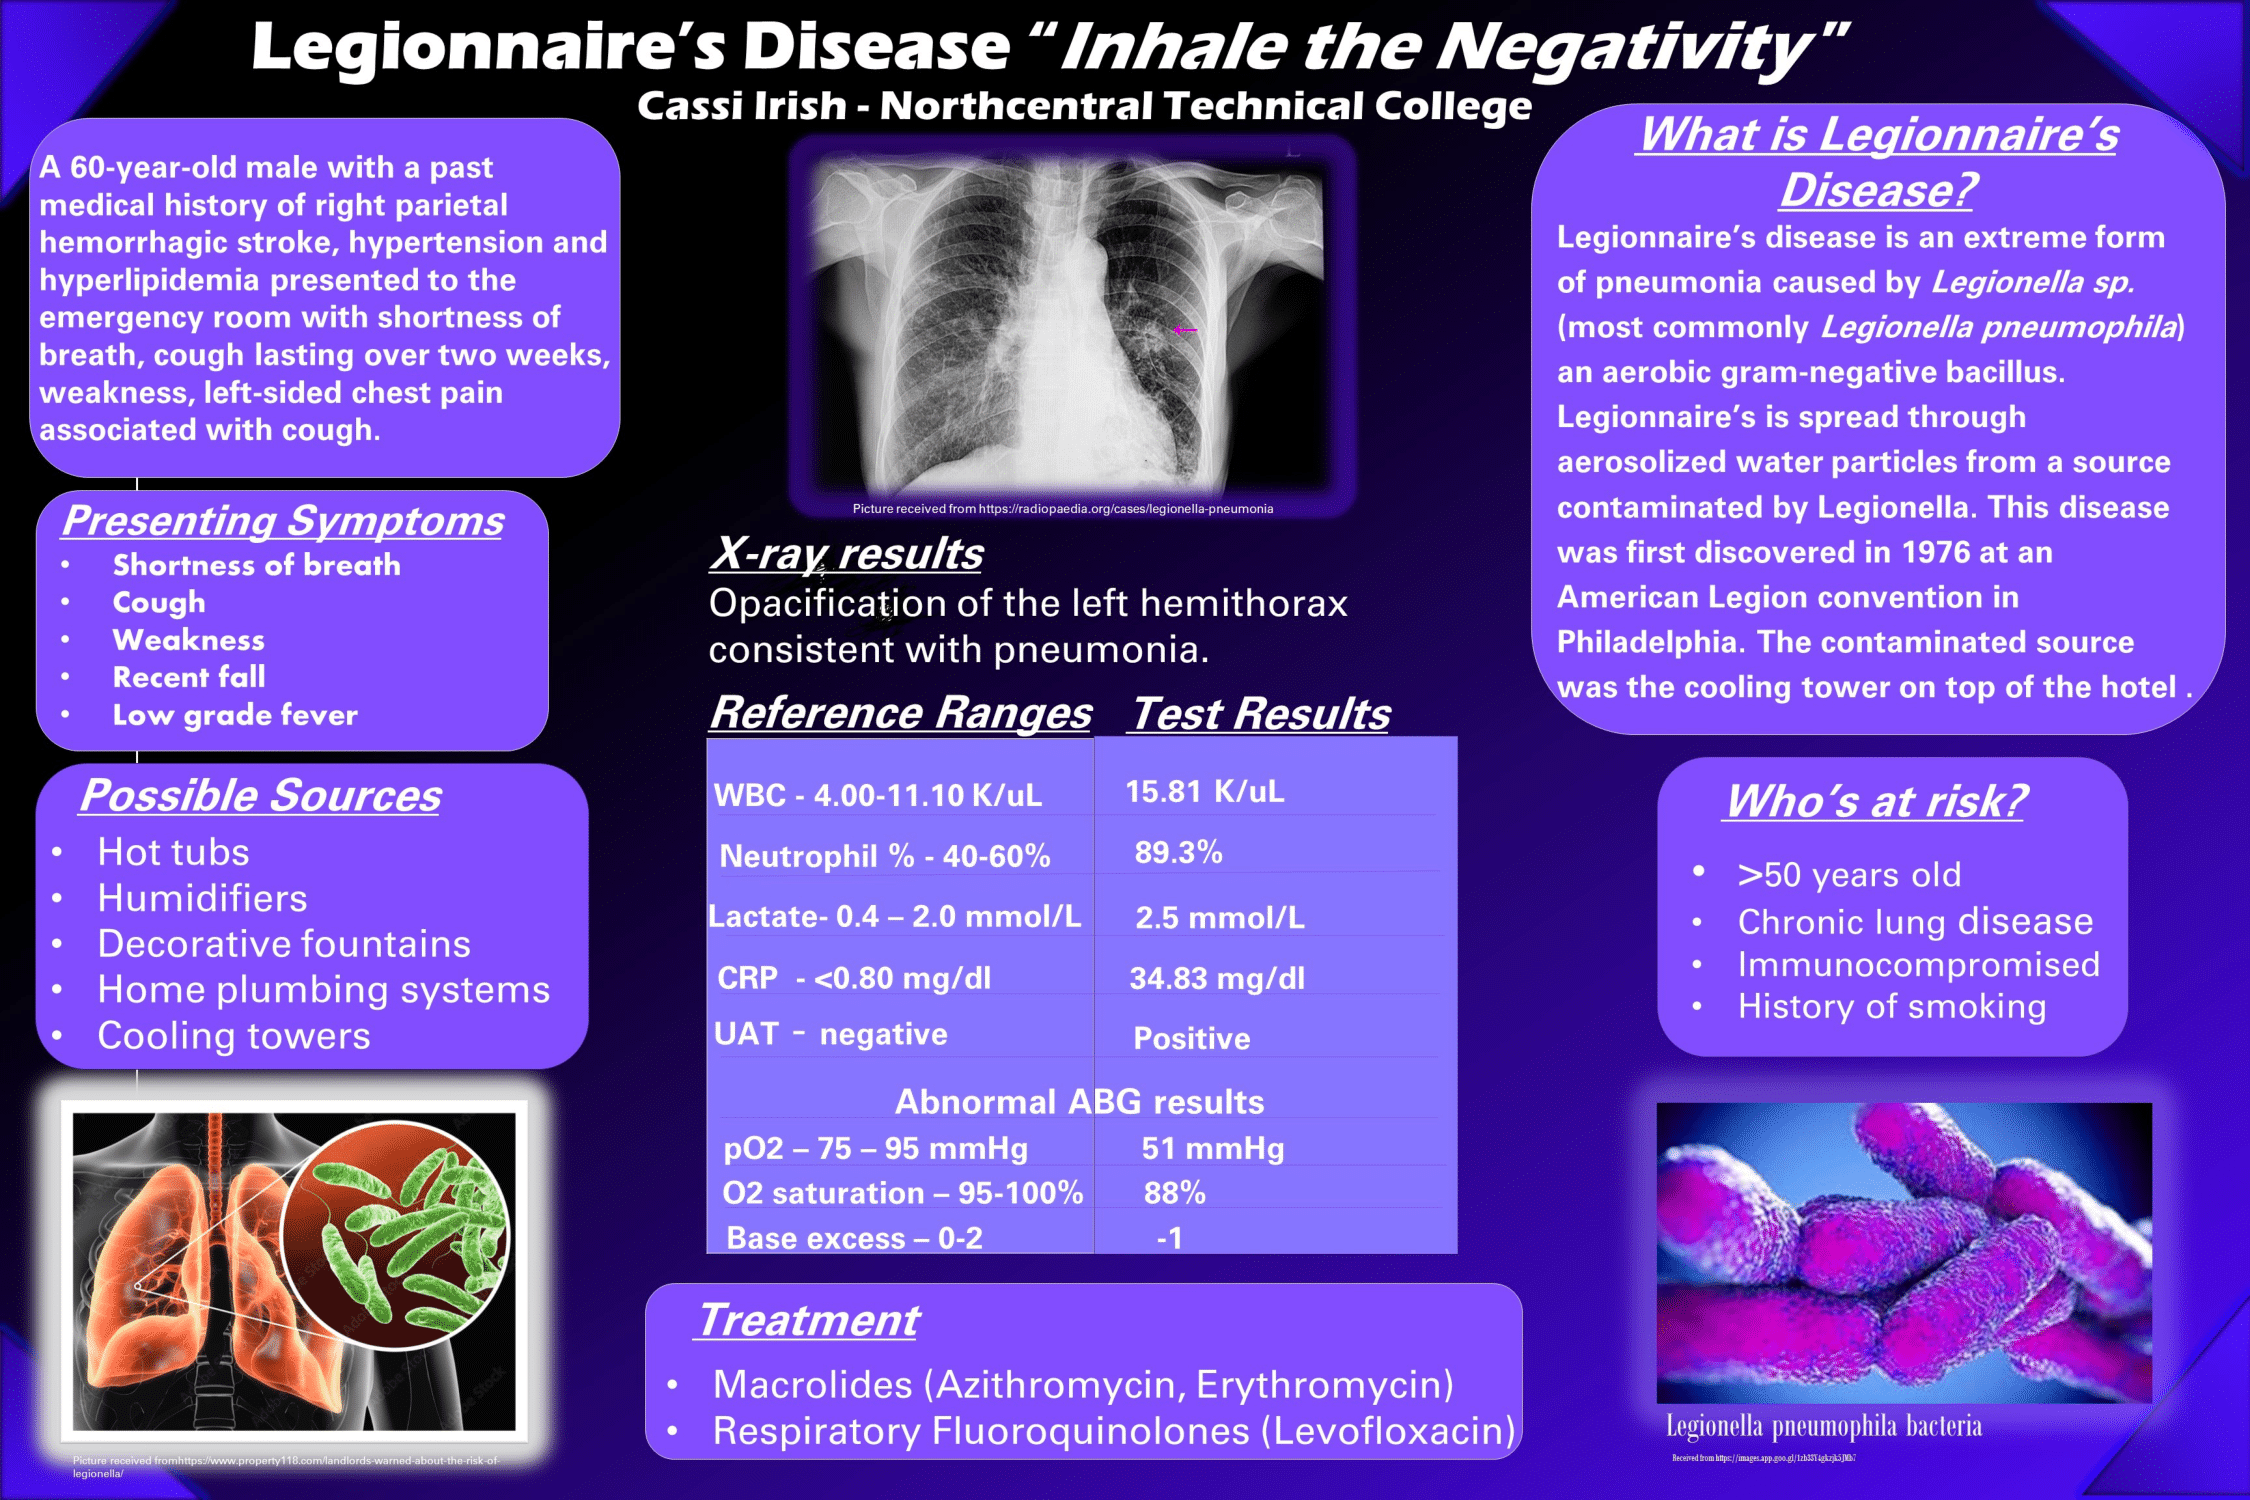 Legionnaire's Disease - Inhale the Negativity poster by Cassi Irish